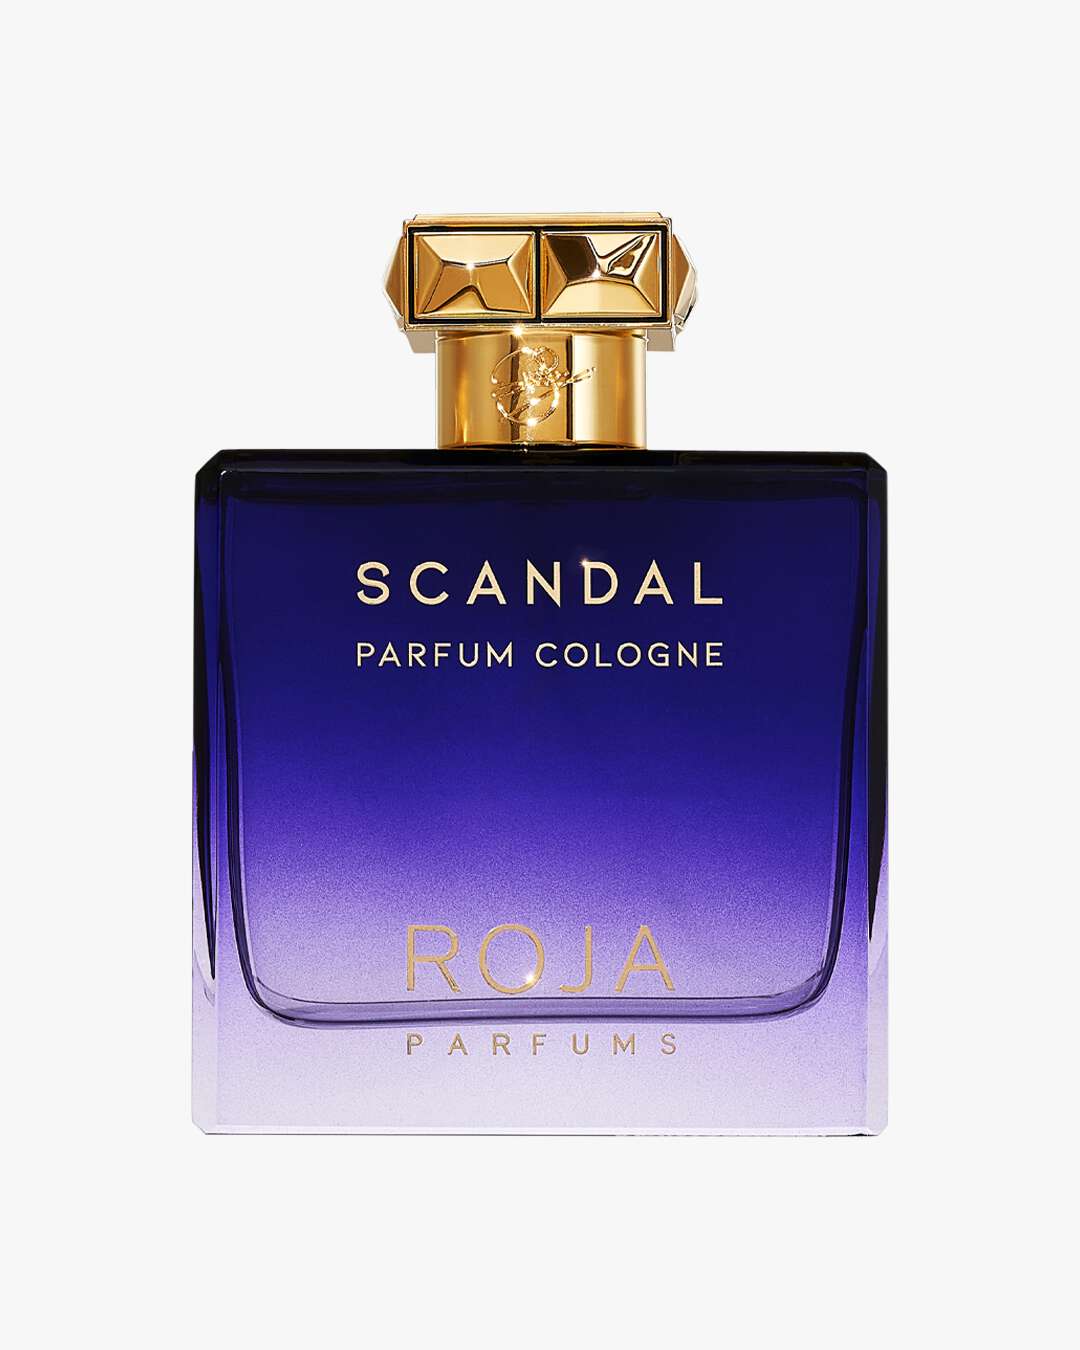 SCANDAL Parfum Cologne 100 ml